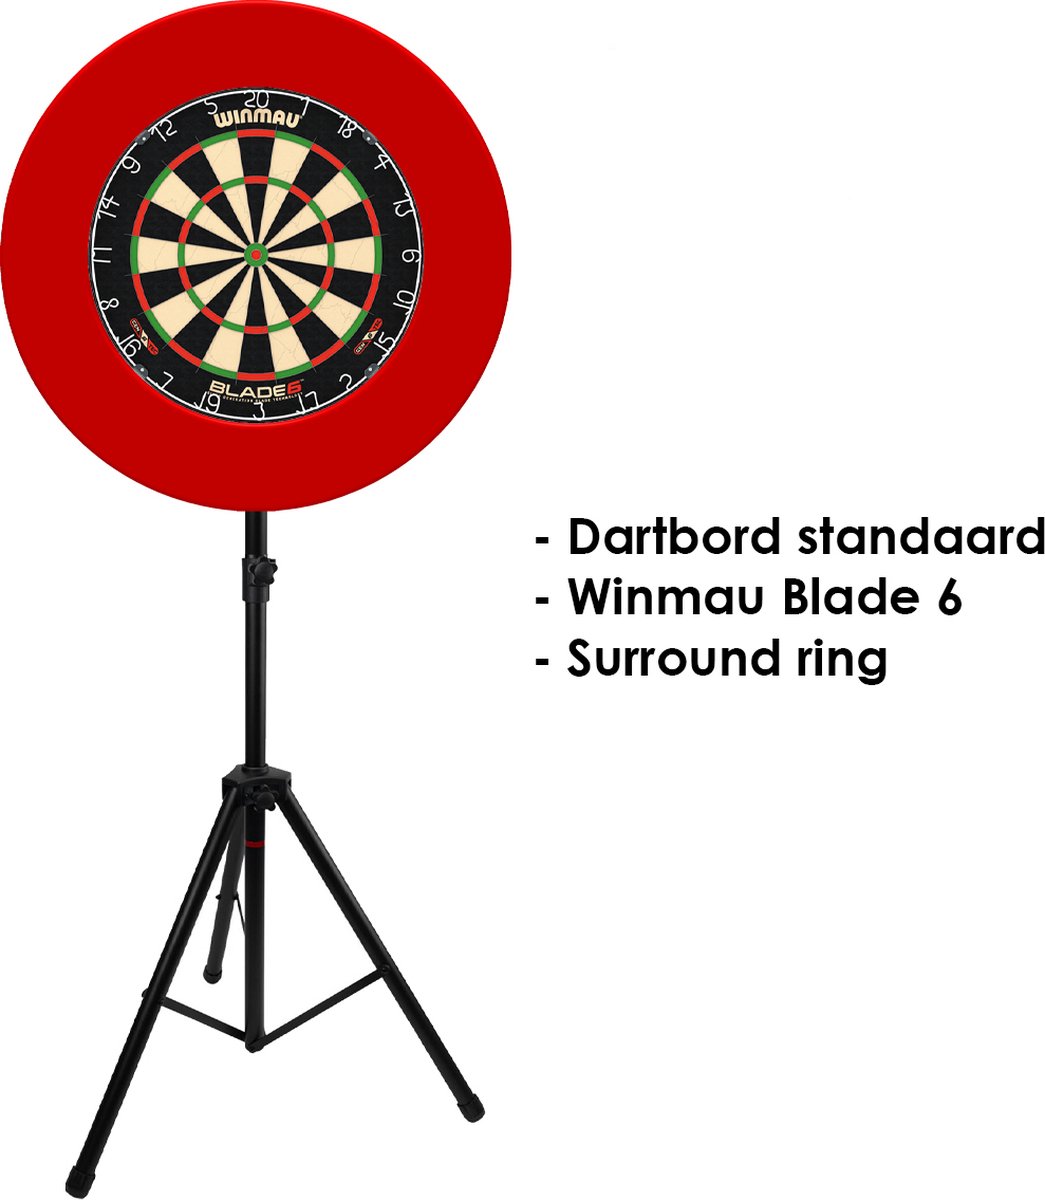 Dragon darts - Portable dartbord standaard pakket - inclusief Winmau Blade 6 - dartbord - surround ring - rood